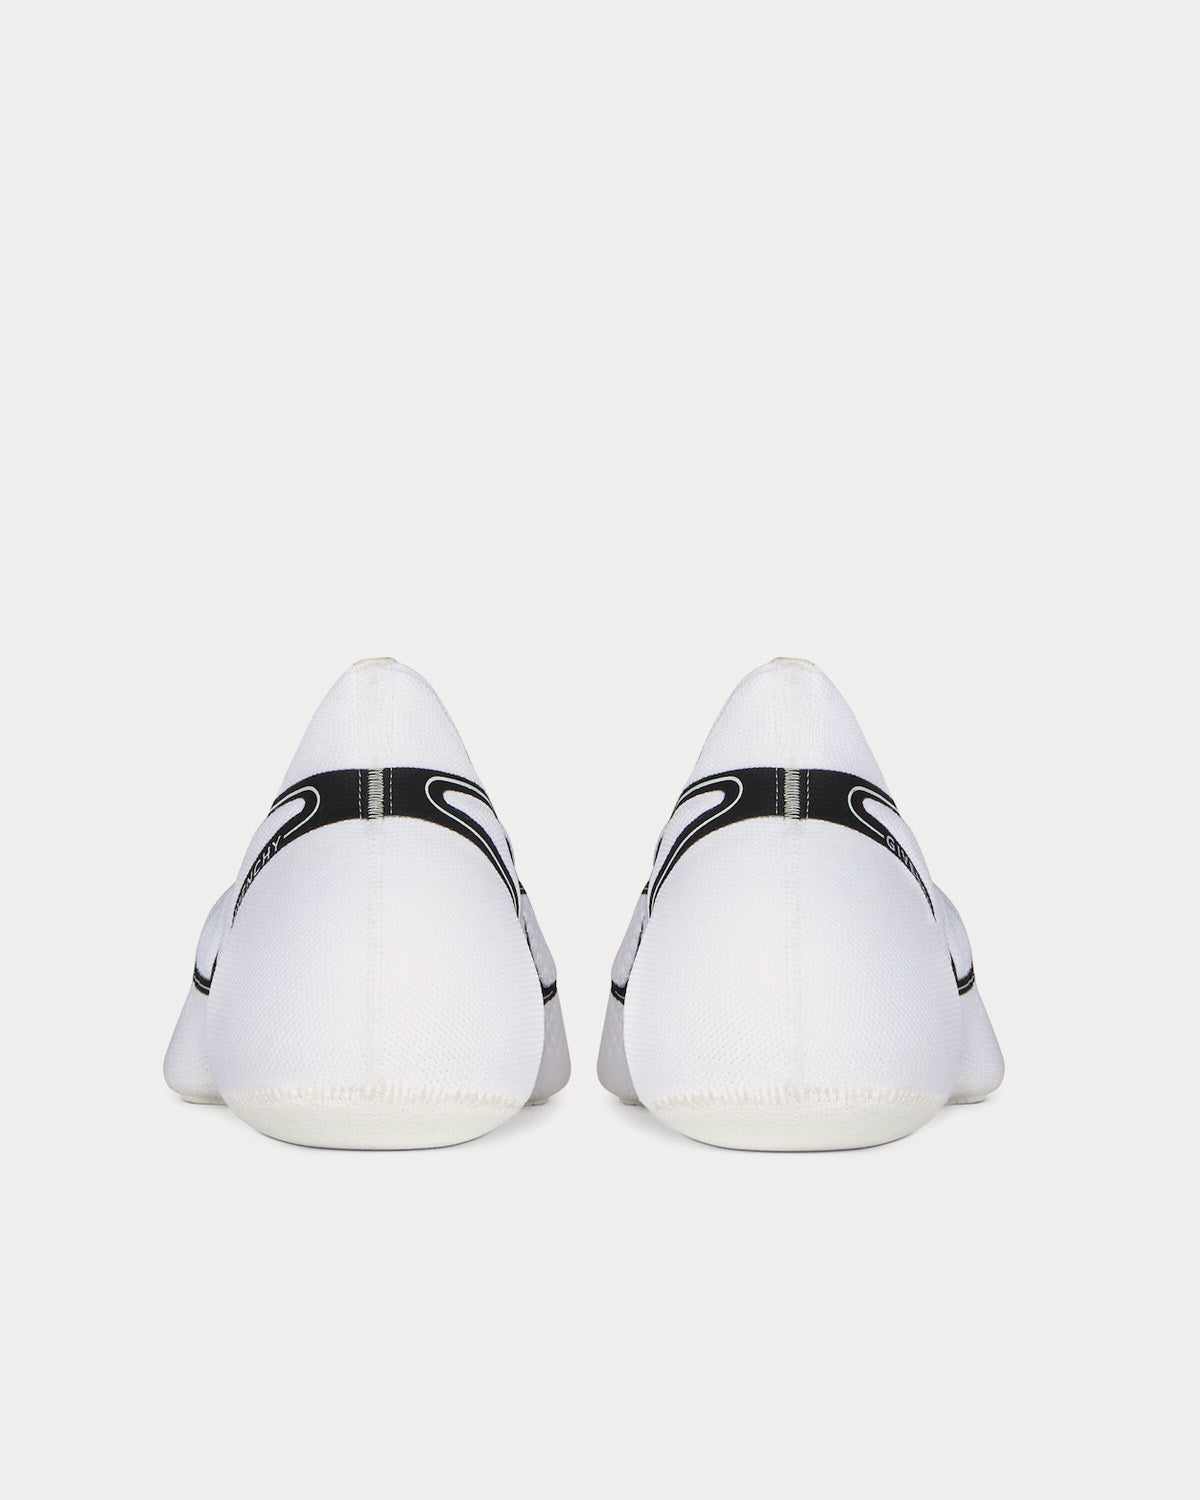 Givenchy - TK-360+ Mesh White / Black Slip On Sneakers